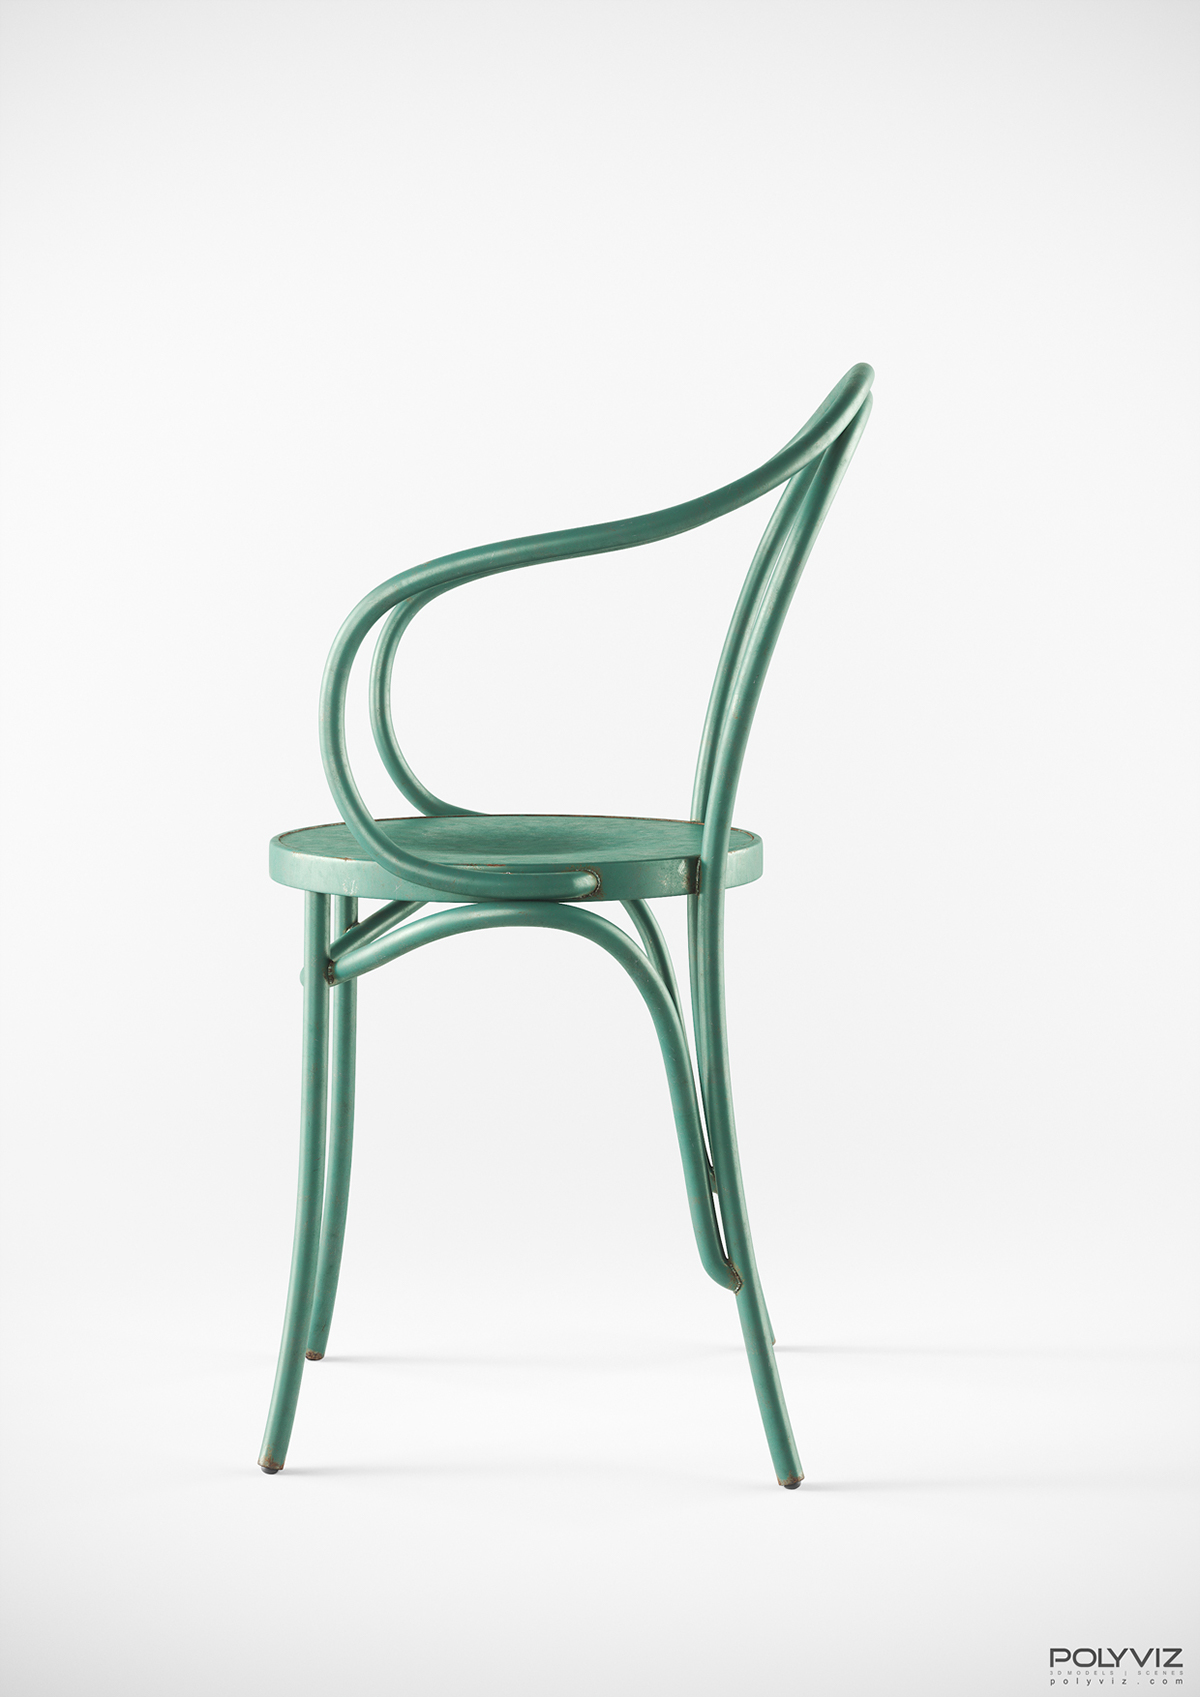 3d max corona render  Mari product design  old chair rust rust chair Render studio polyviz